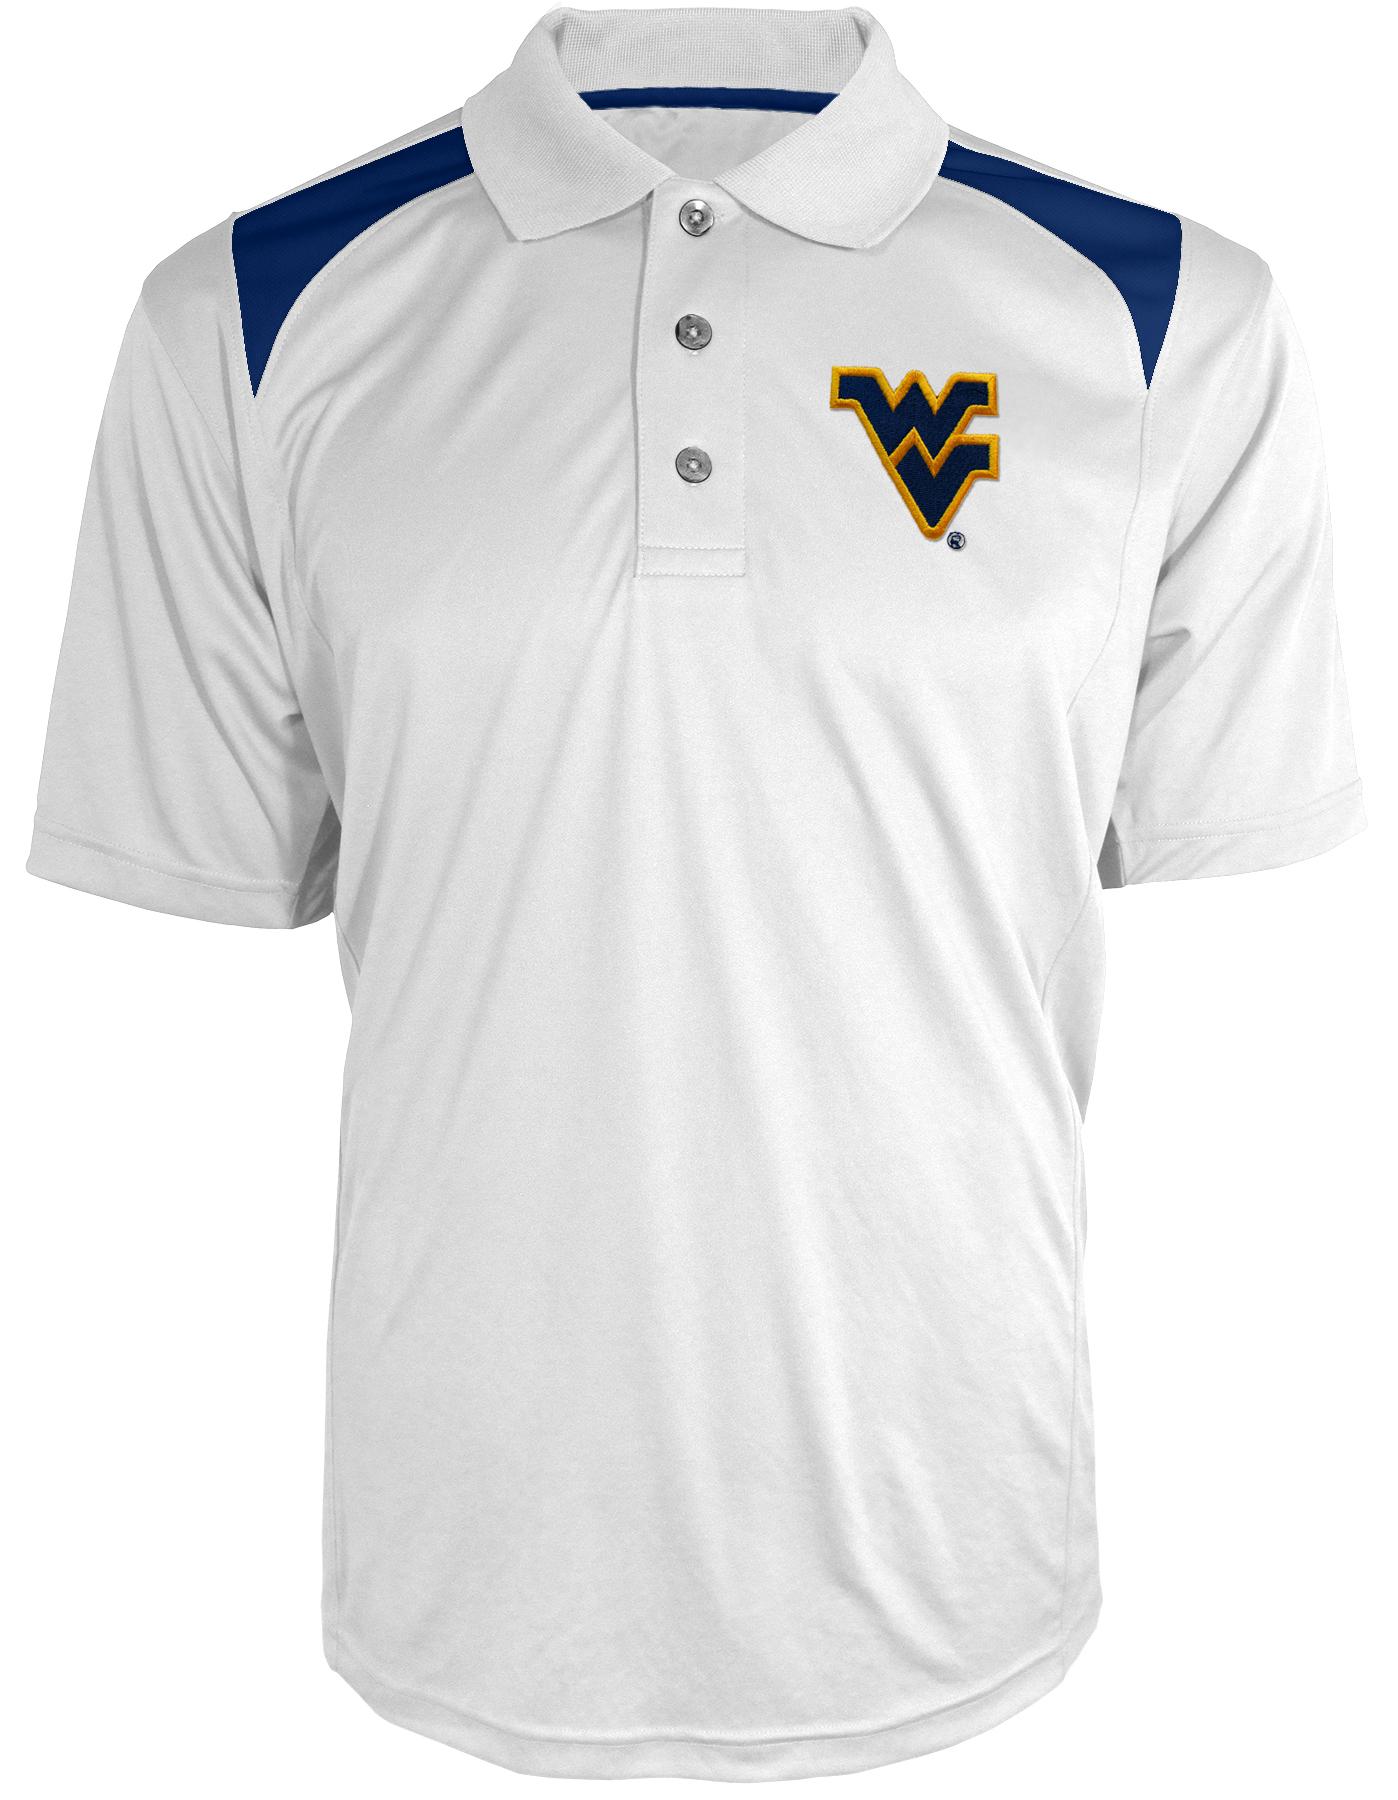 NCAA Men's Polo Shirt - West Virginia University